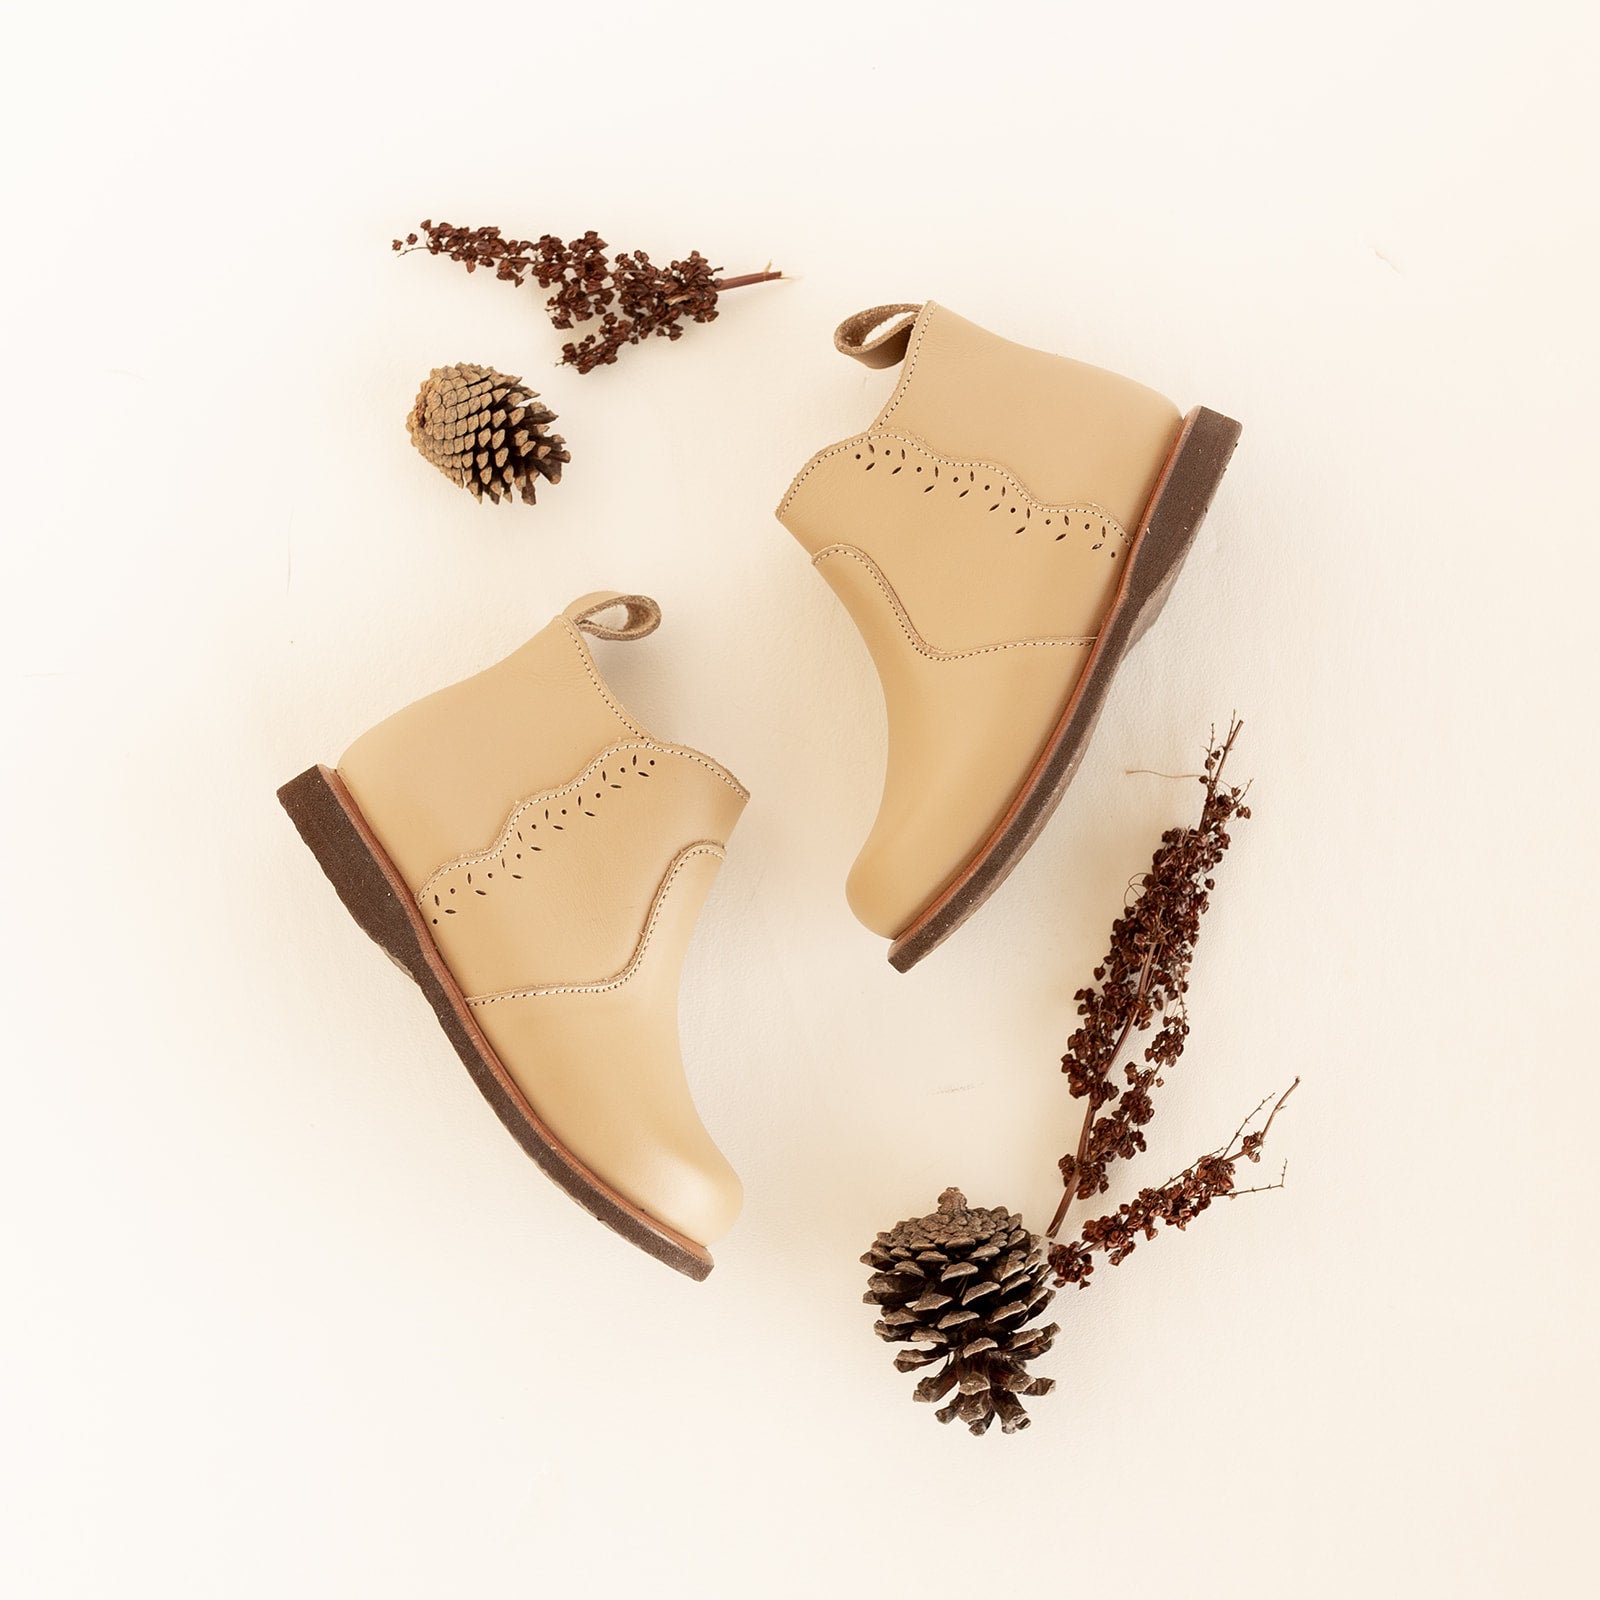 Espresso Viajero Chelsea Boot {Men's Leather Boots}